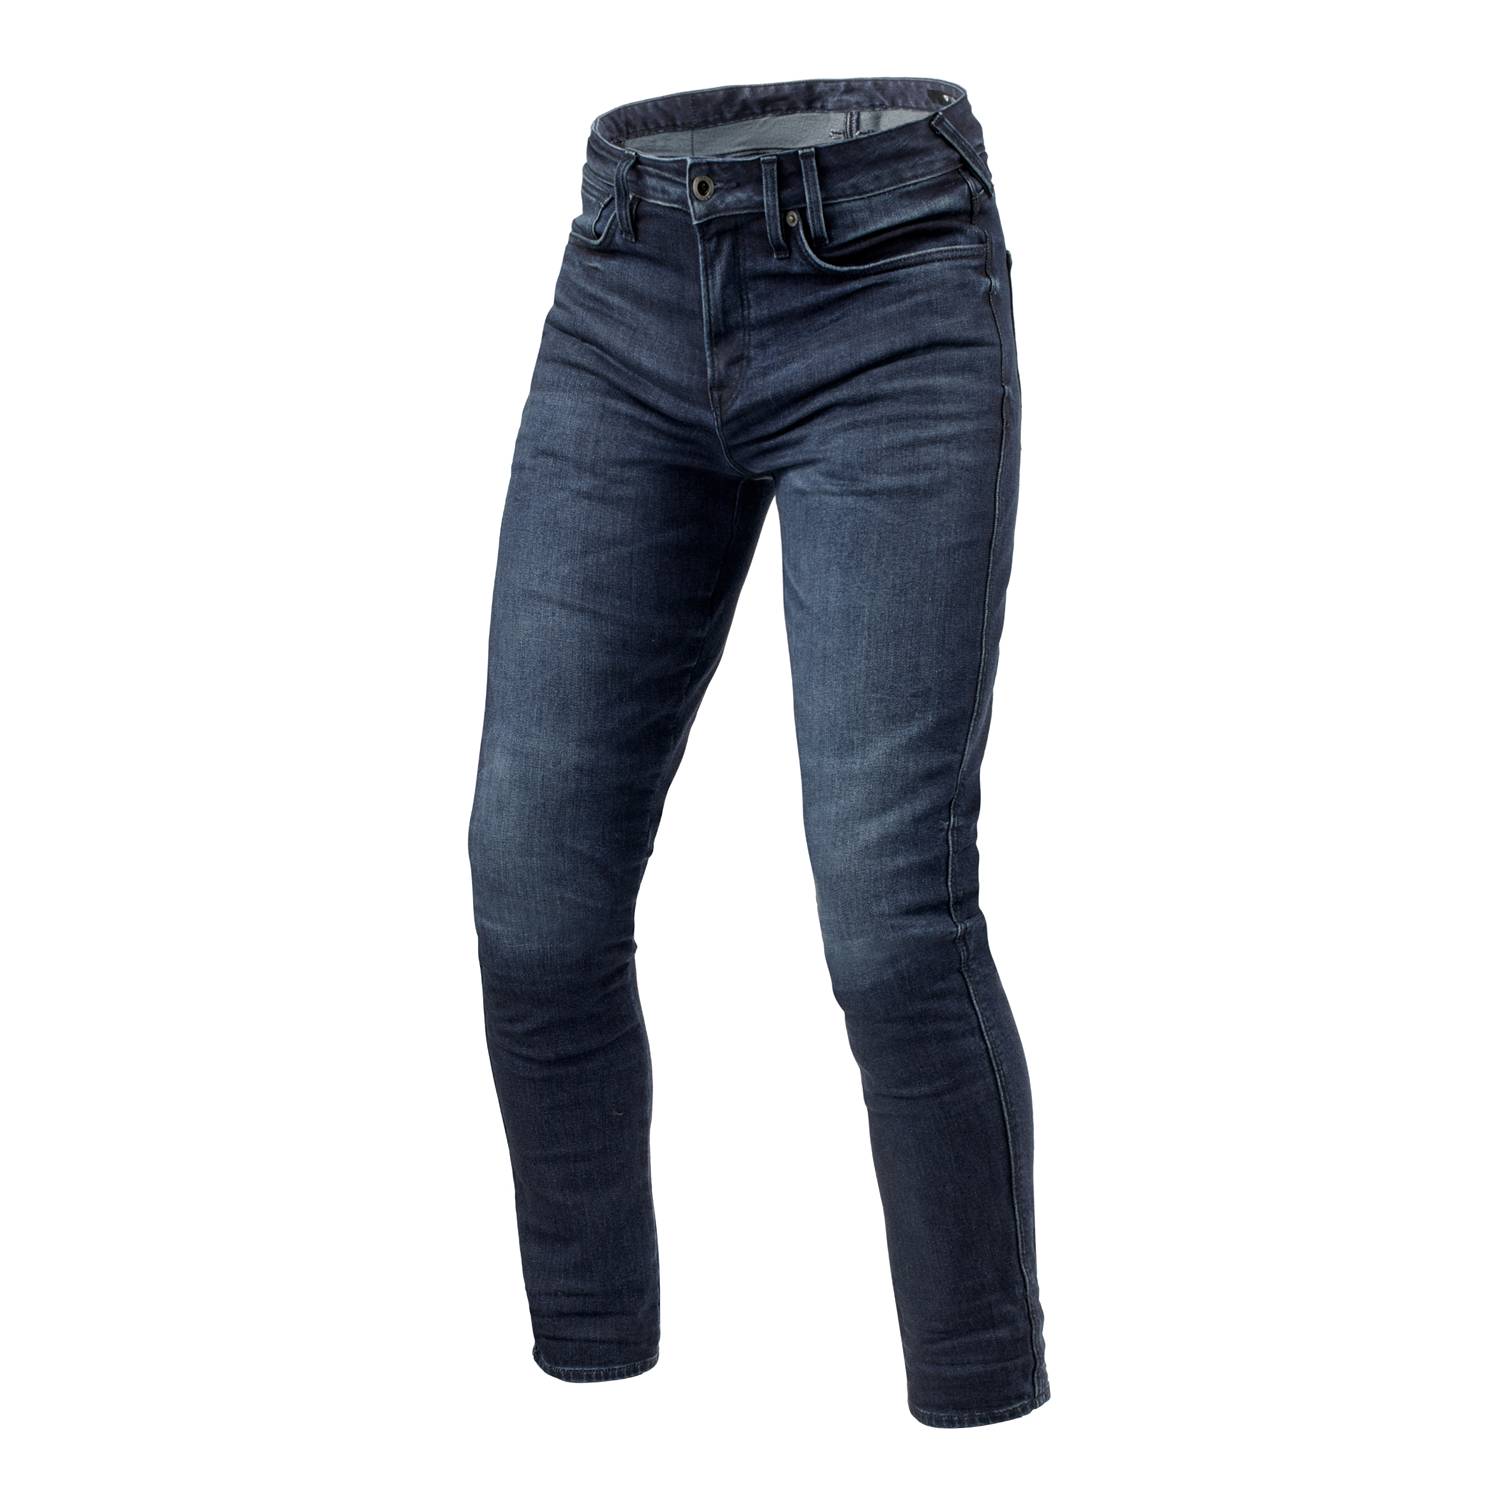 Image of REV'IT! Jeans Carlin SK Dark Blue Used L34 Motorcycle Jeans Größe L34/W30